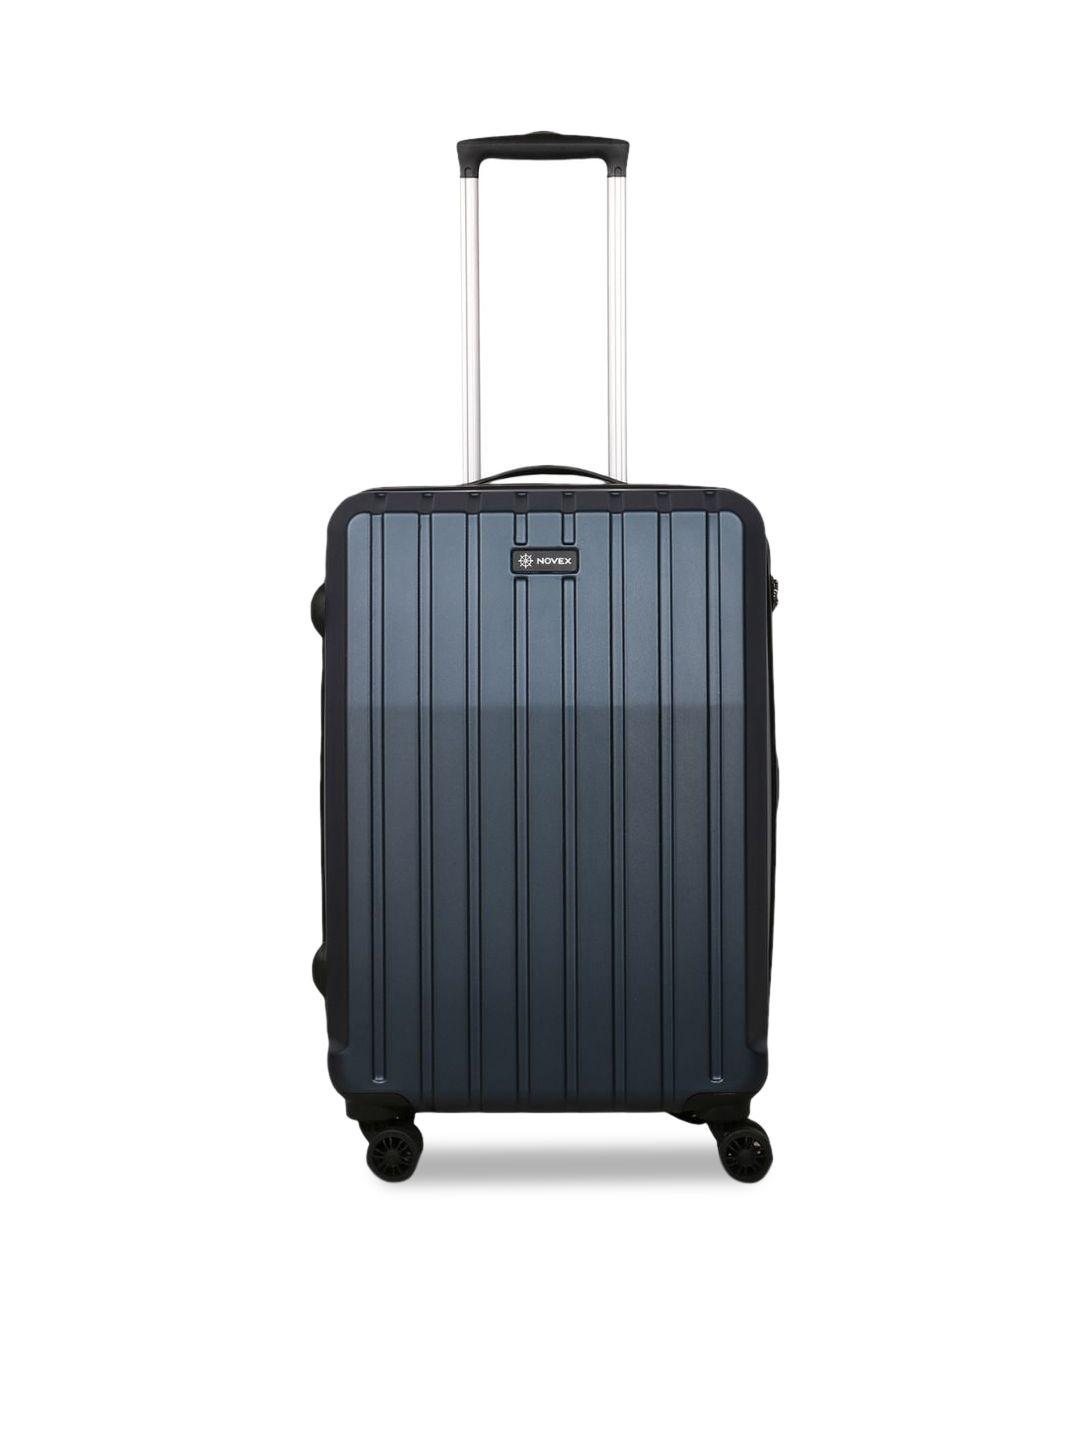 novex hard-sided large trolley suitcase